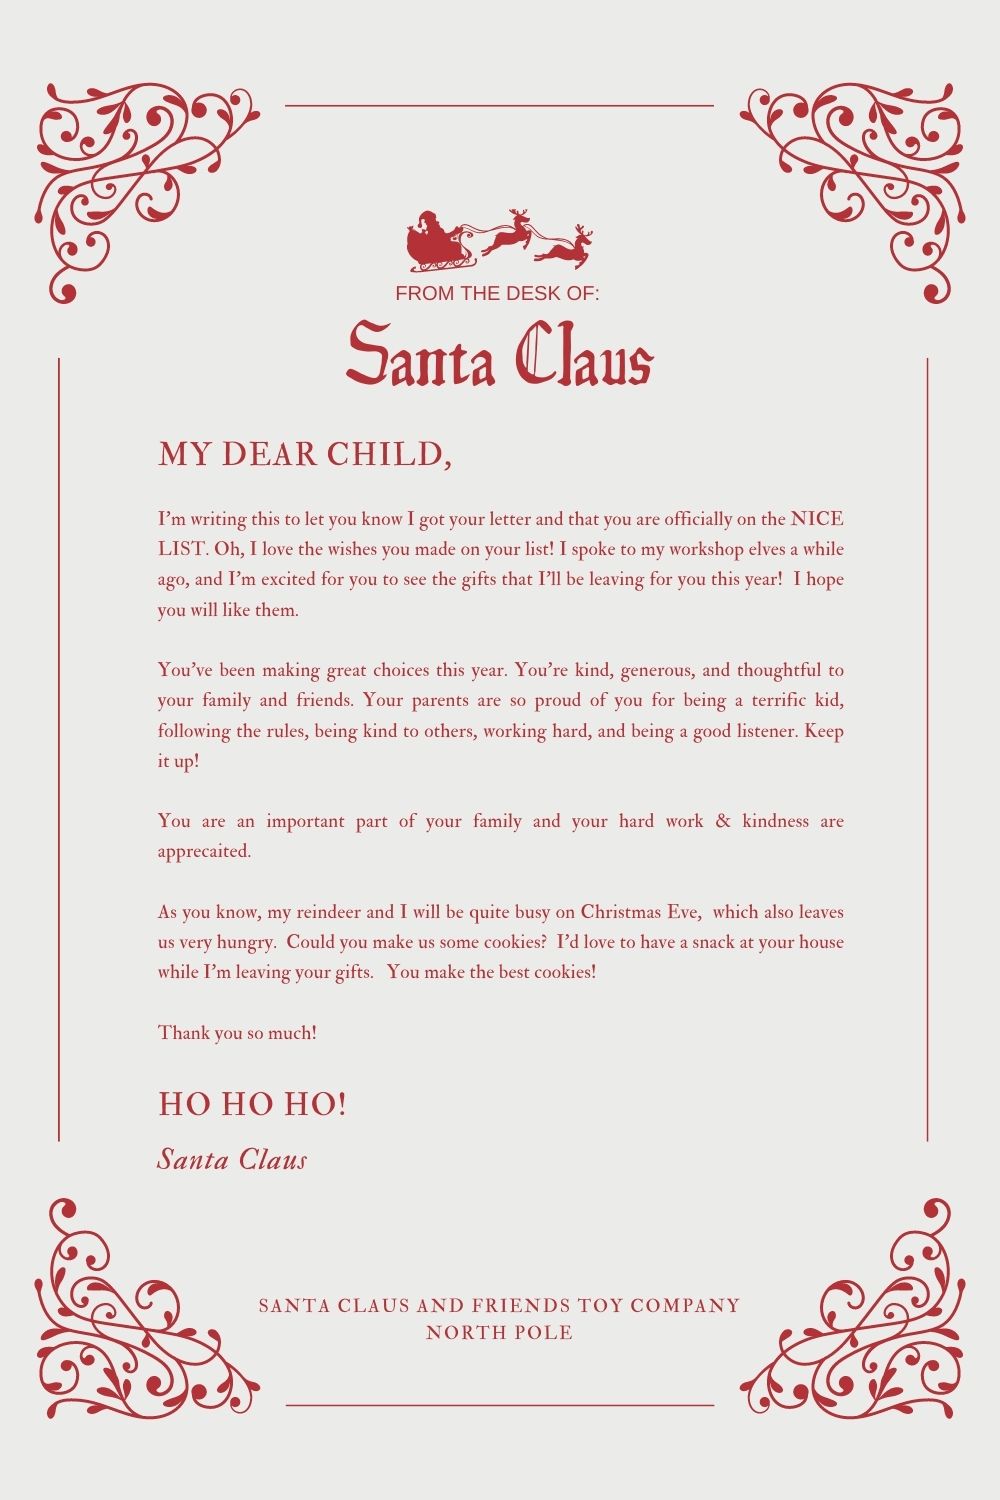 FREE Printable Christmas Tags and Santa Claus Letterhead